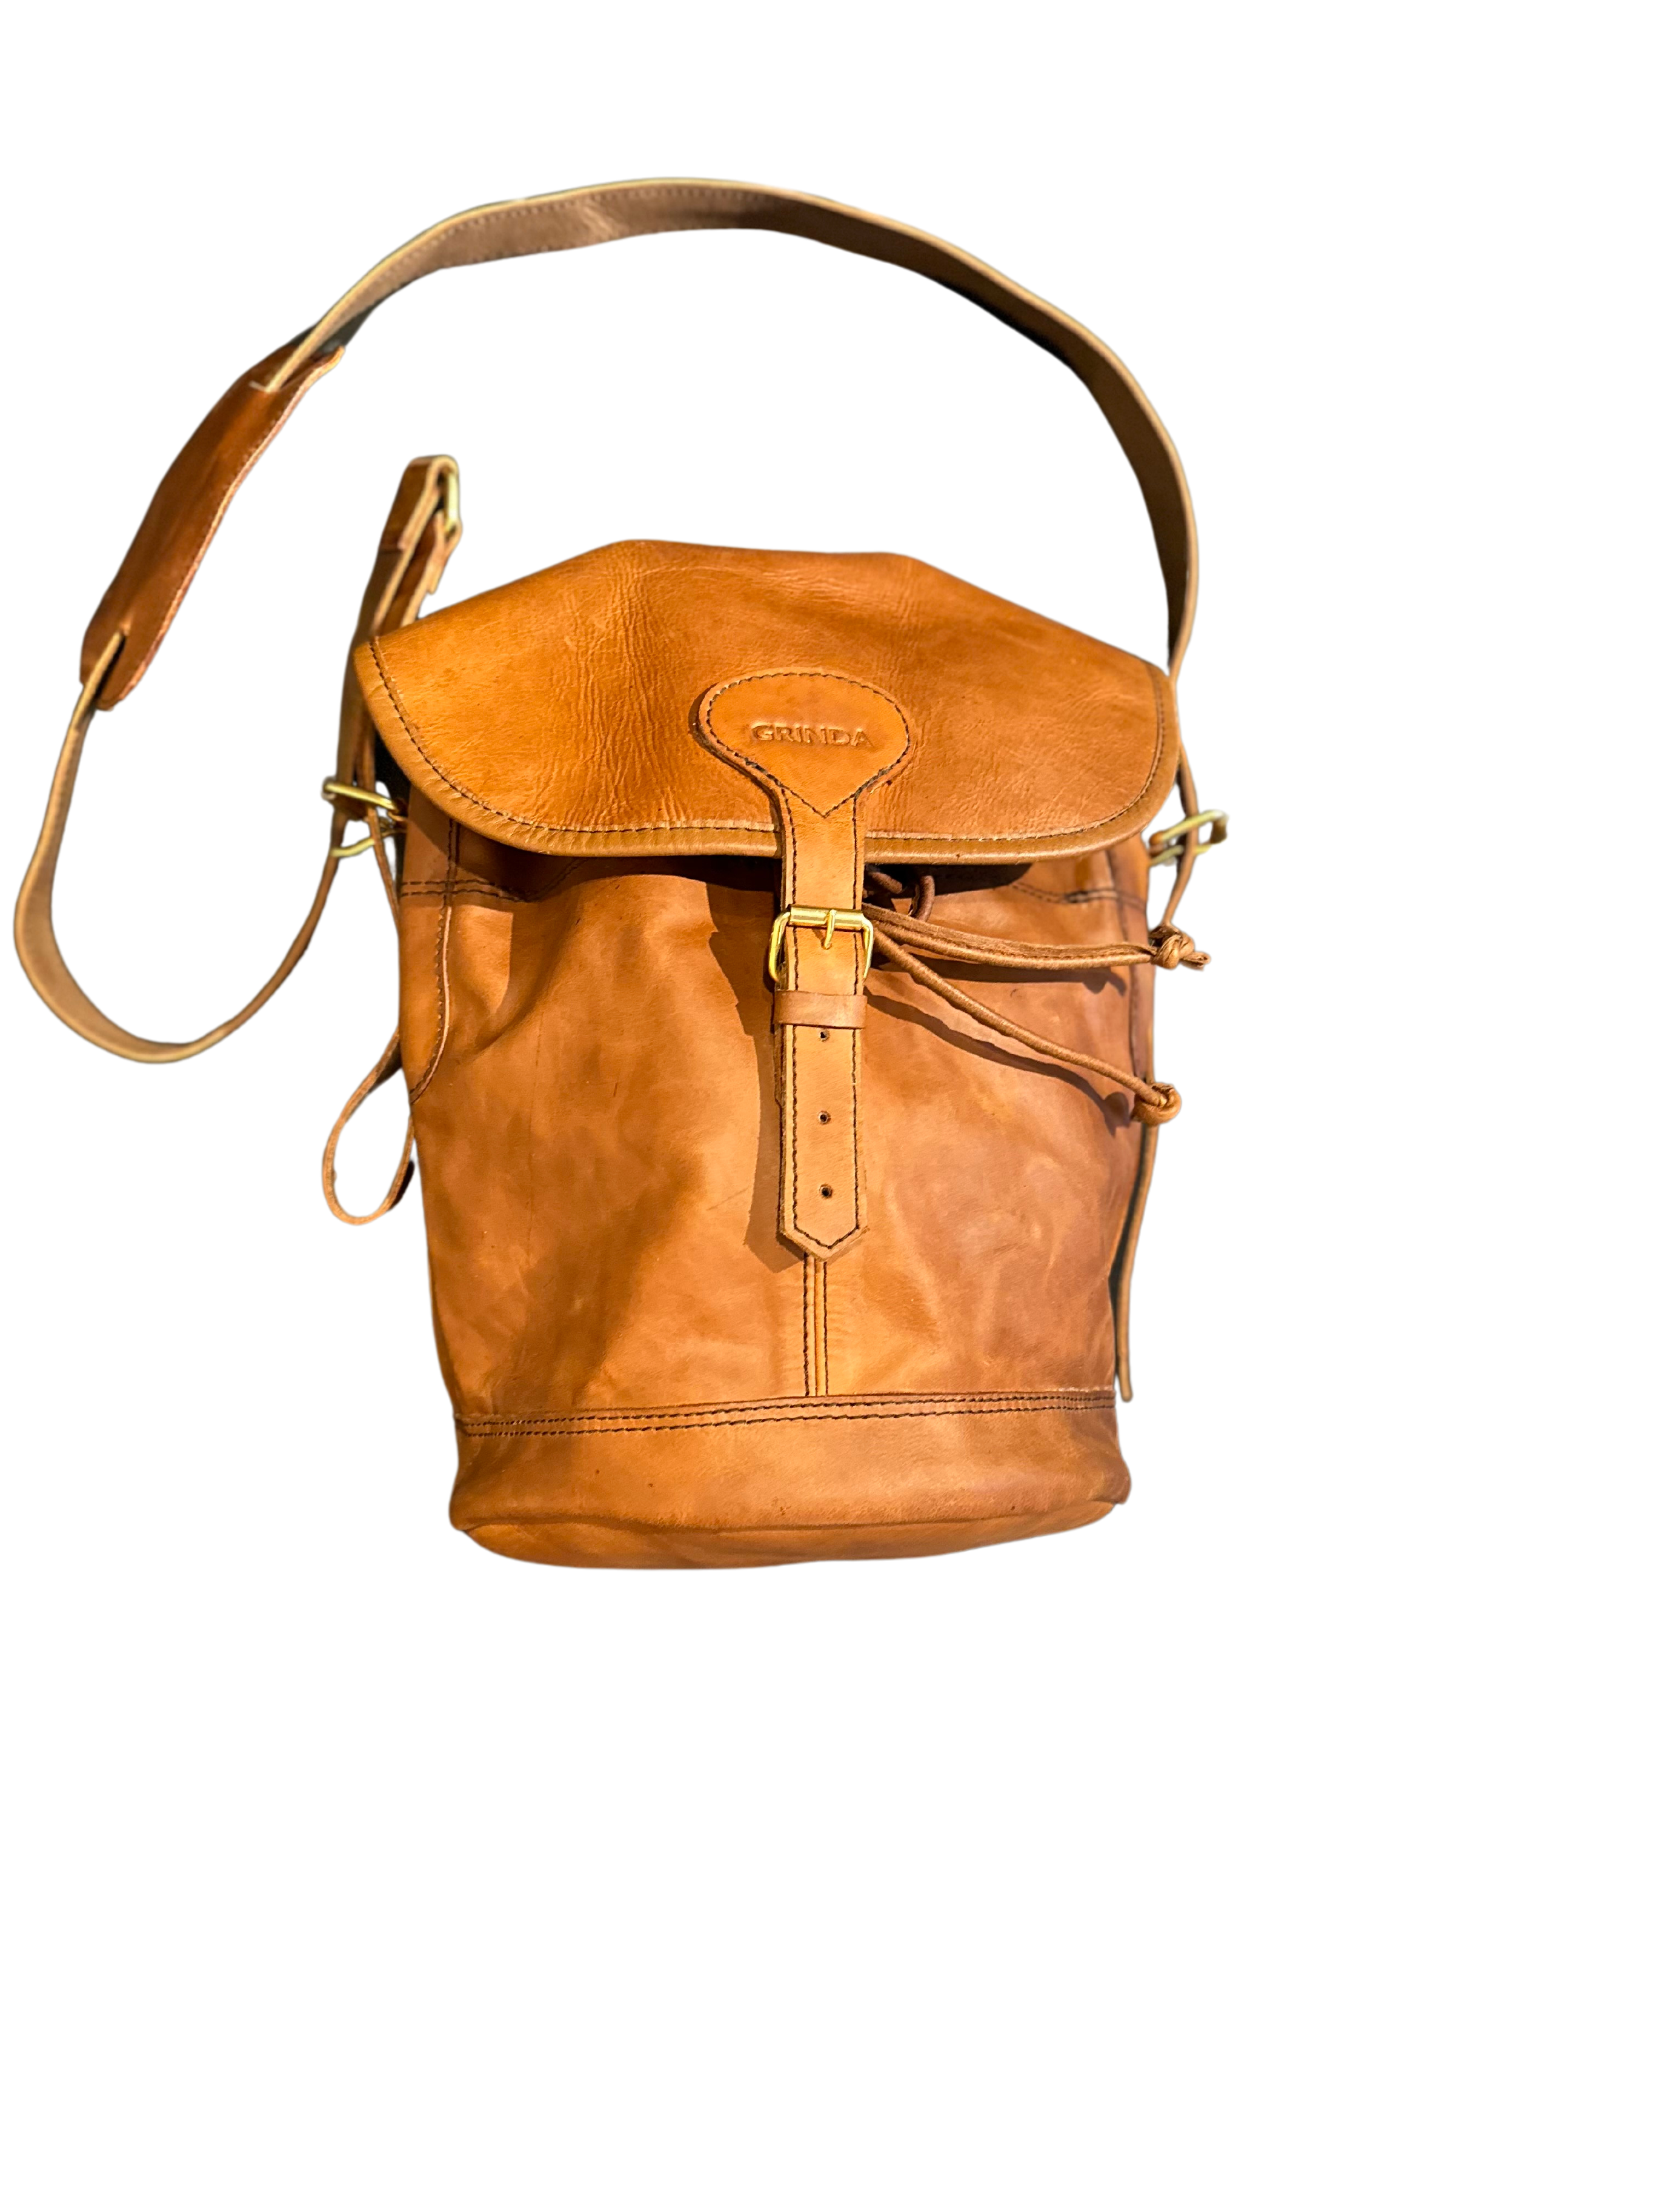 Cartridge duffel bag leather